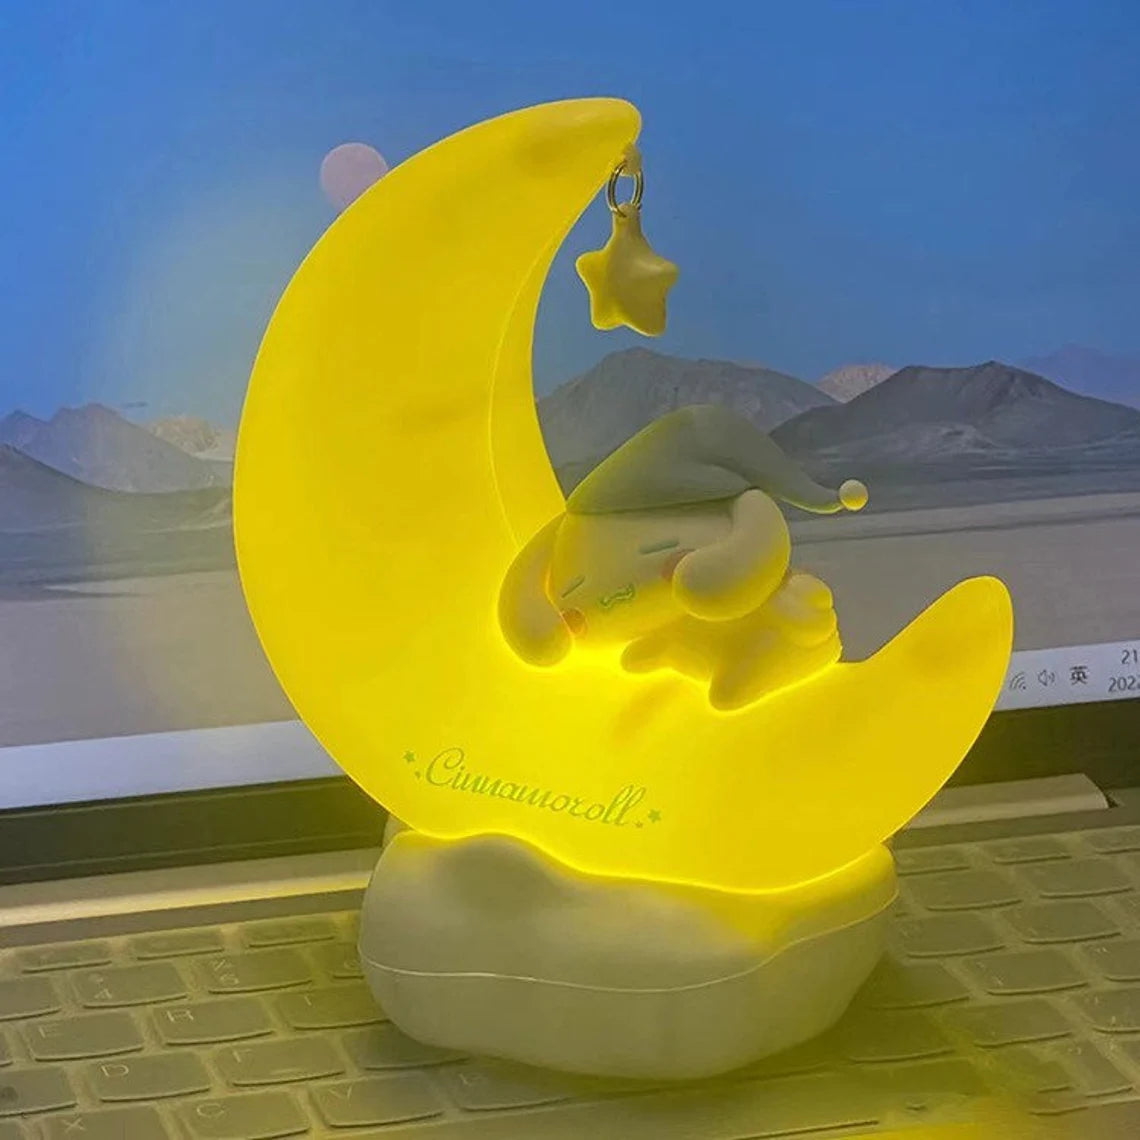 Sanrio Cinnamoroll sits on Moon Night Yellow Light with USB Recharge